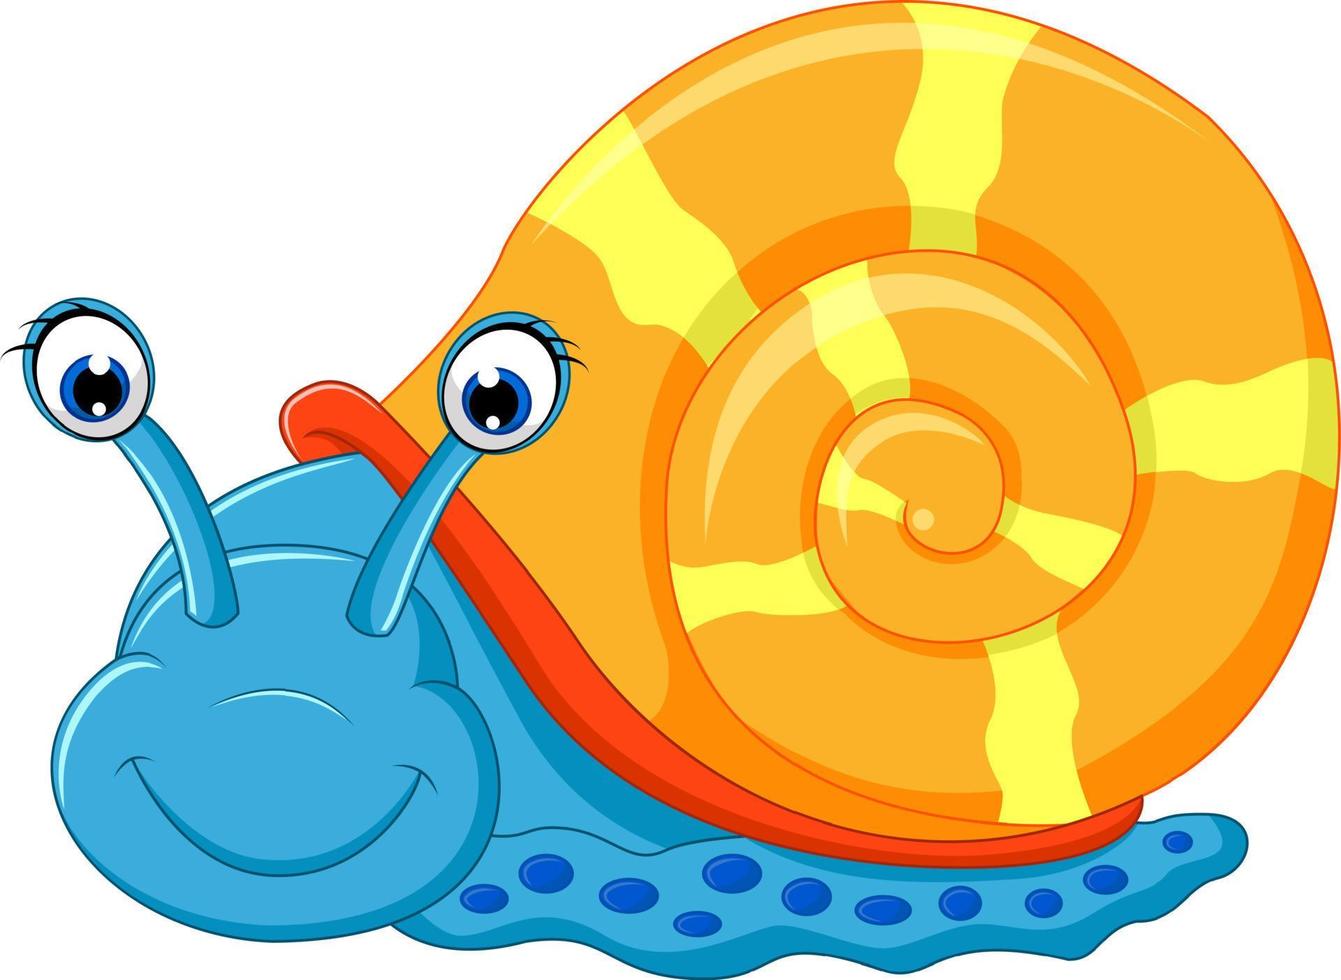 Cute snail cartoon running vector